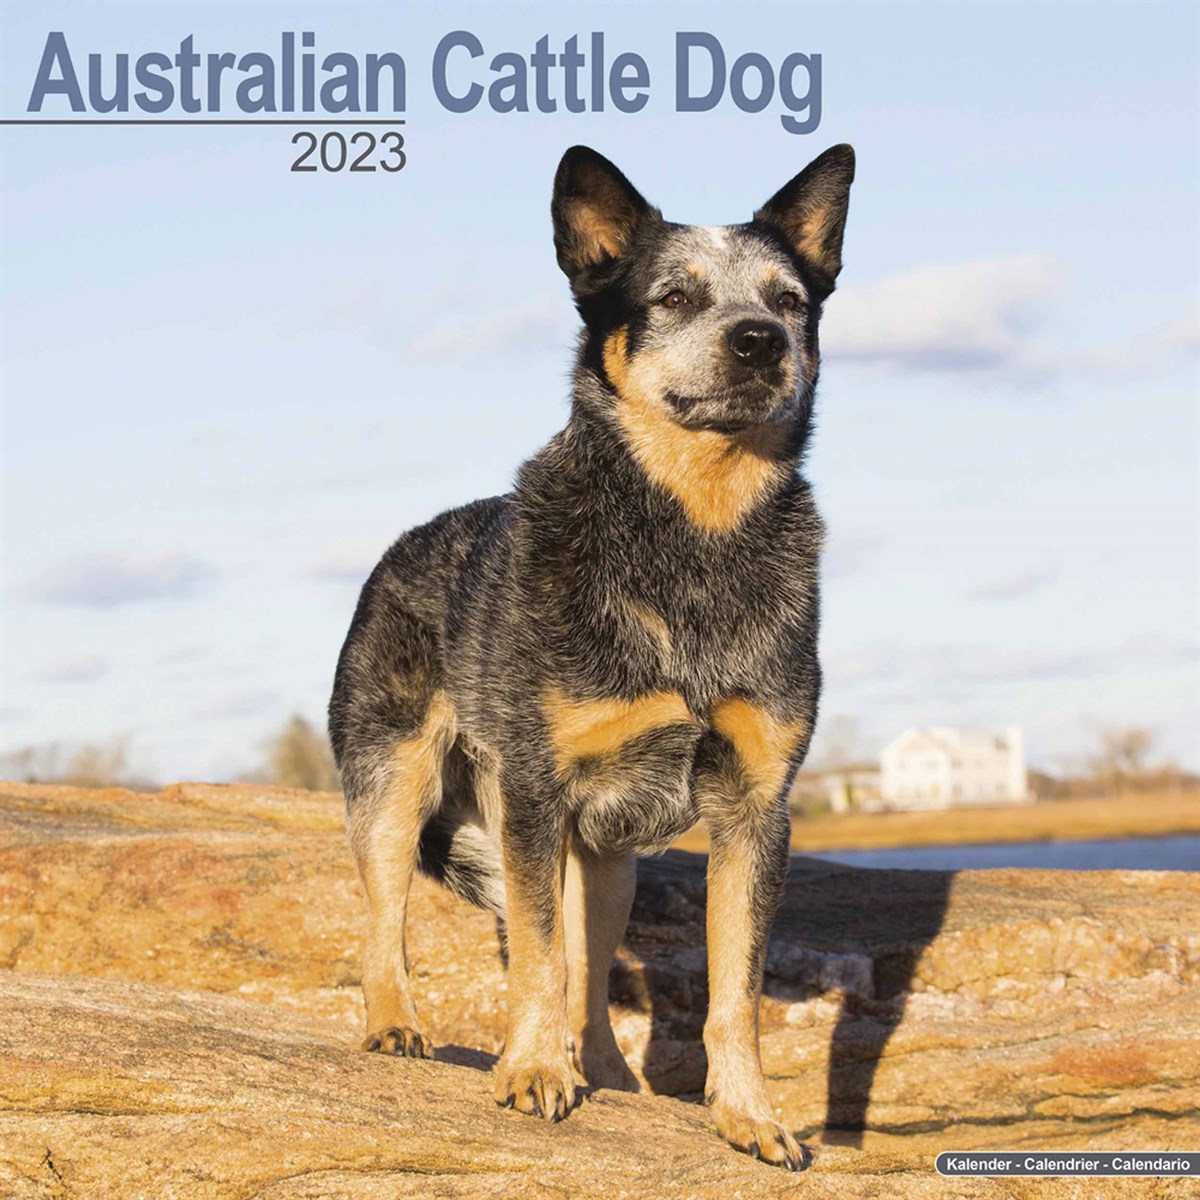 Australian Cattle Dog 2023 Calendars